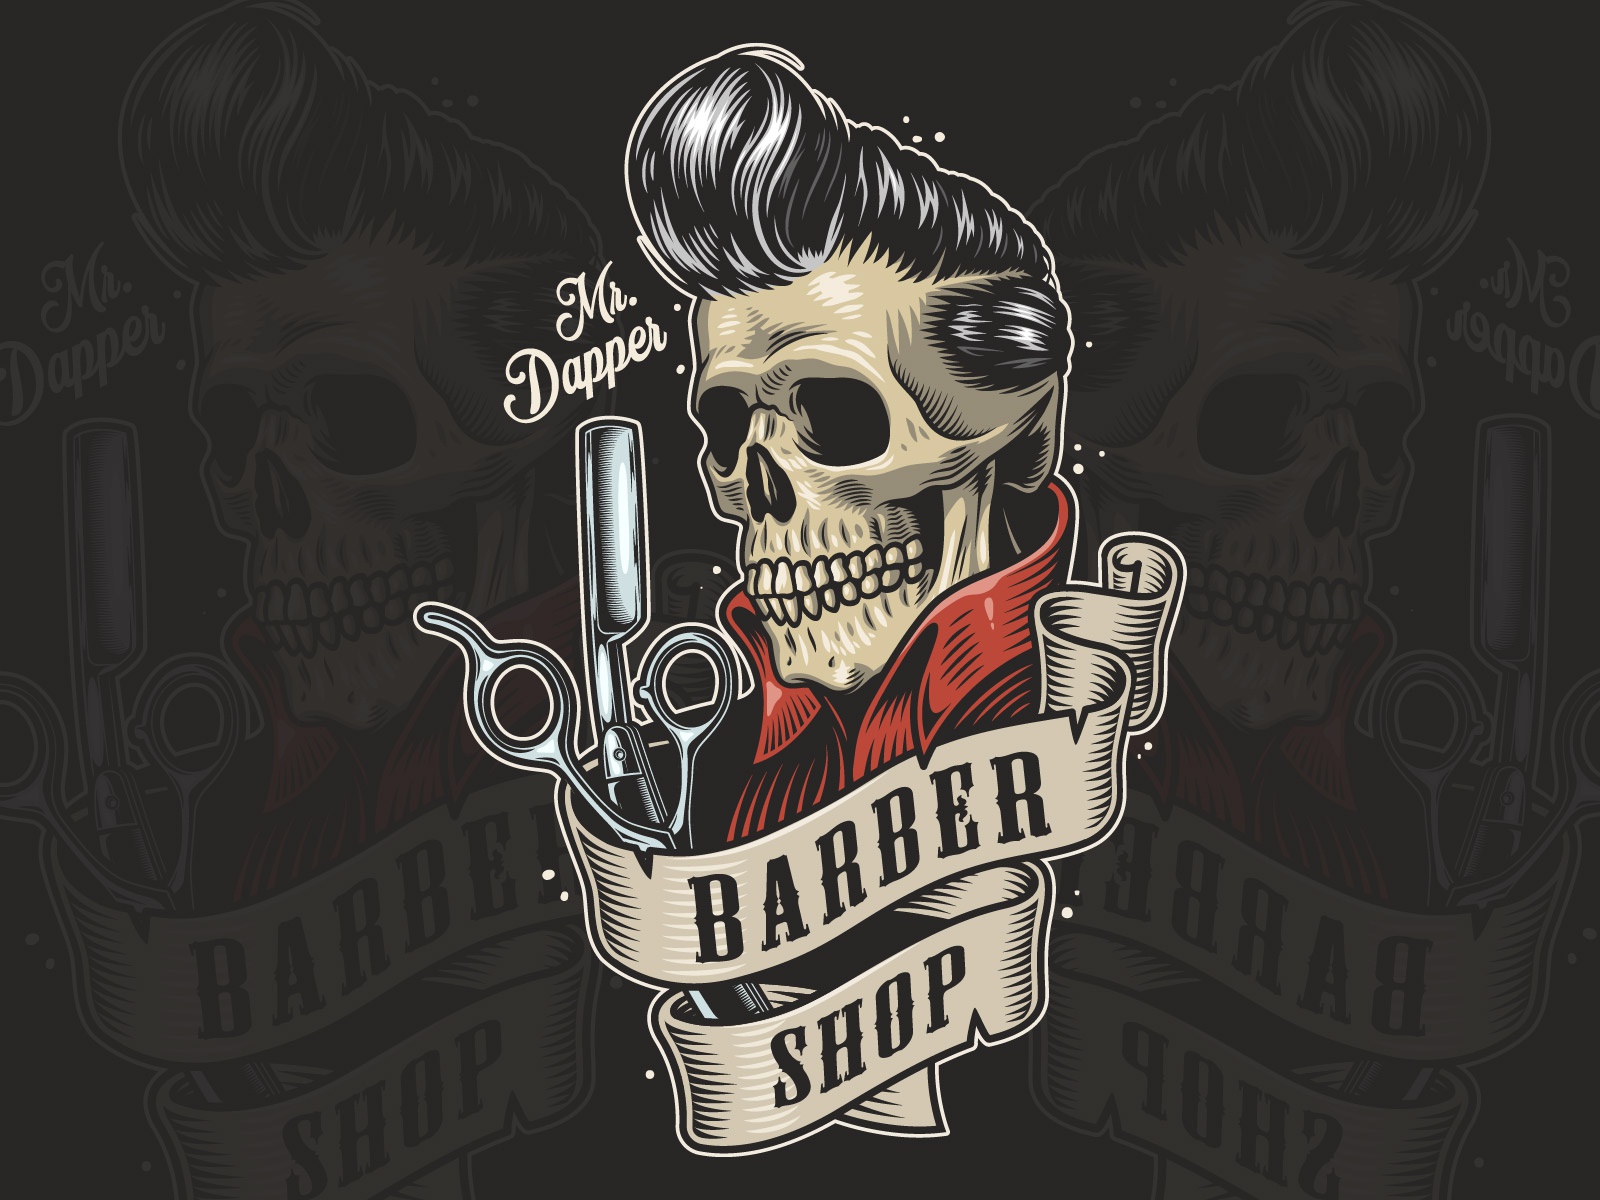 Barbershop logo with Skull